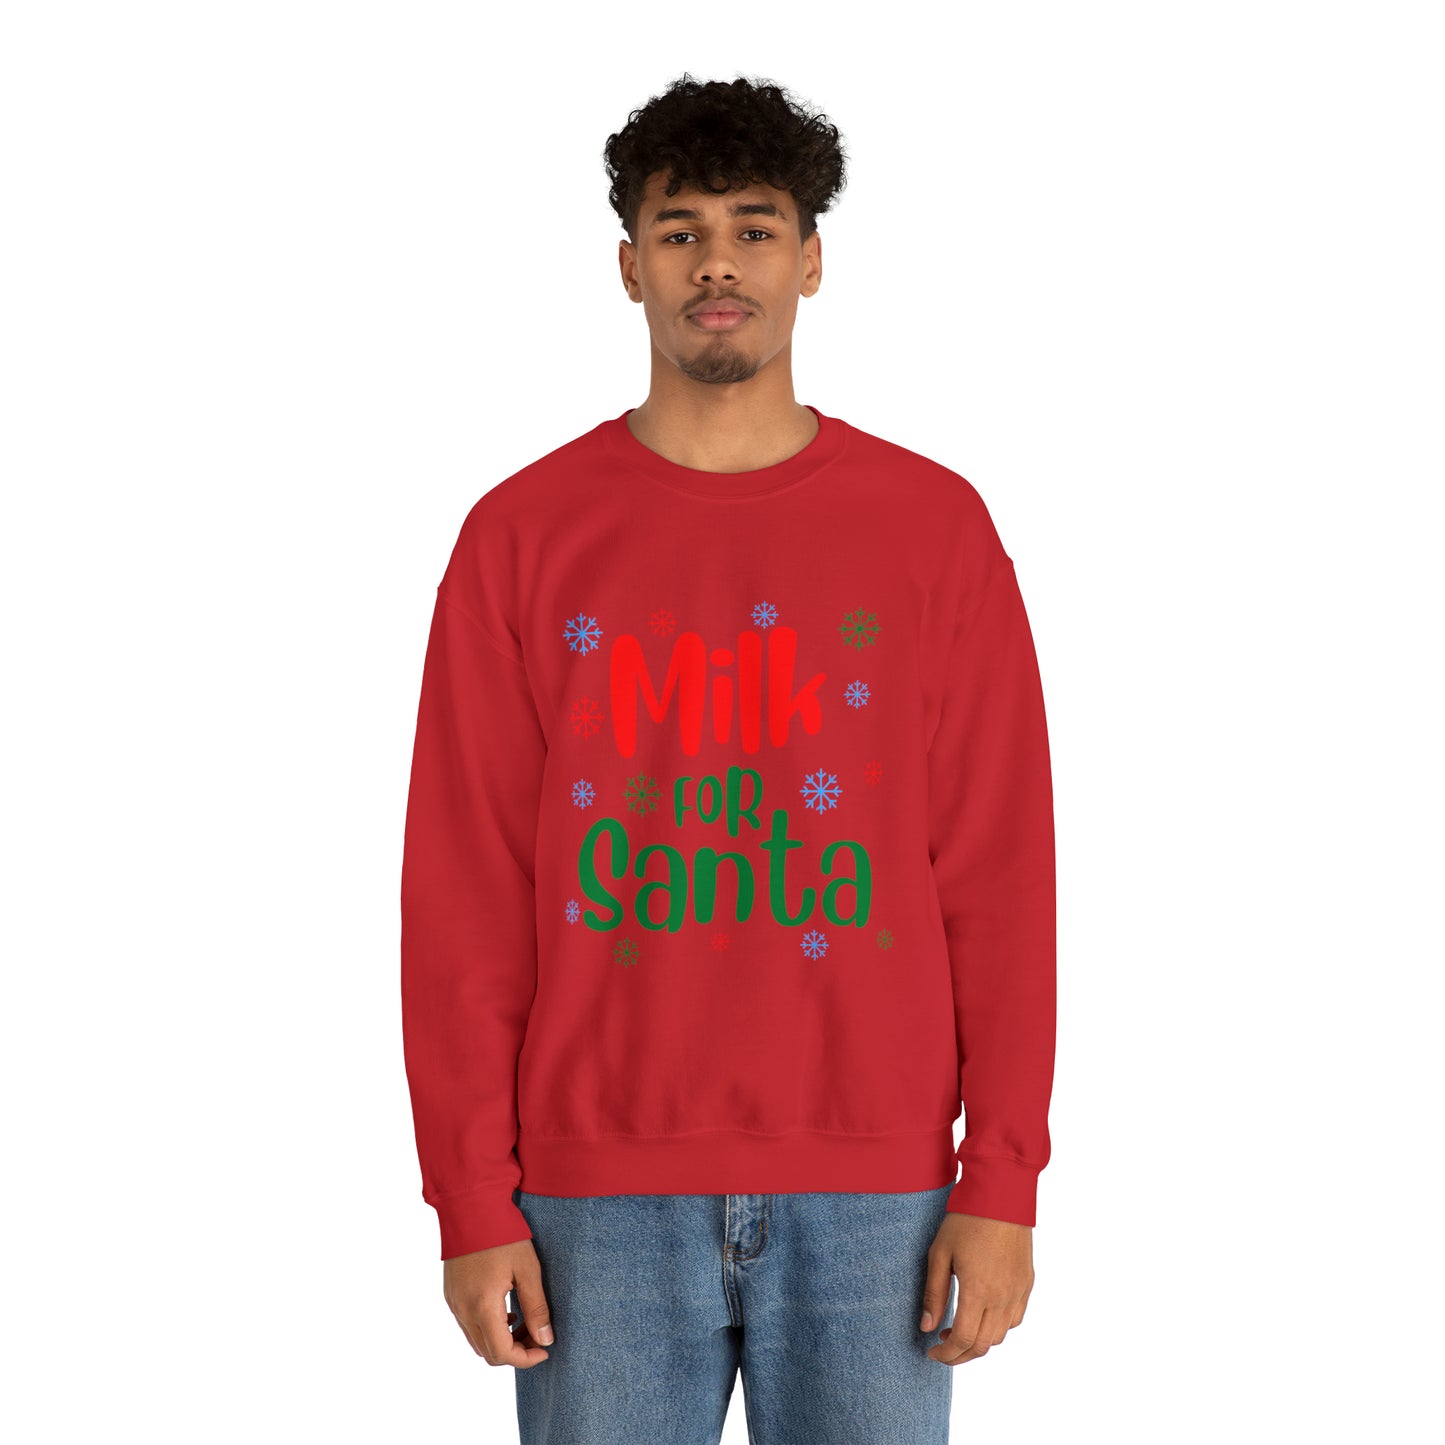 Milk for Santa Christmas Crewneck Sweatshirt